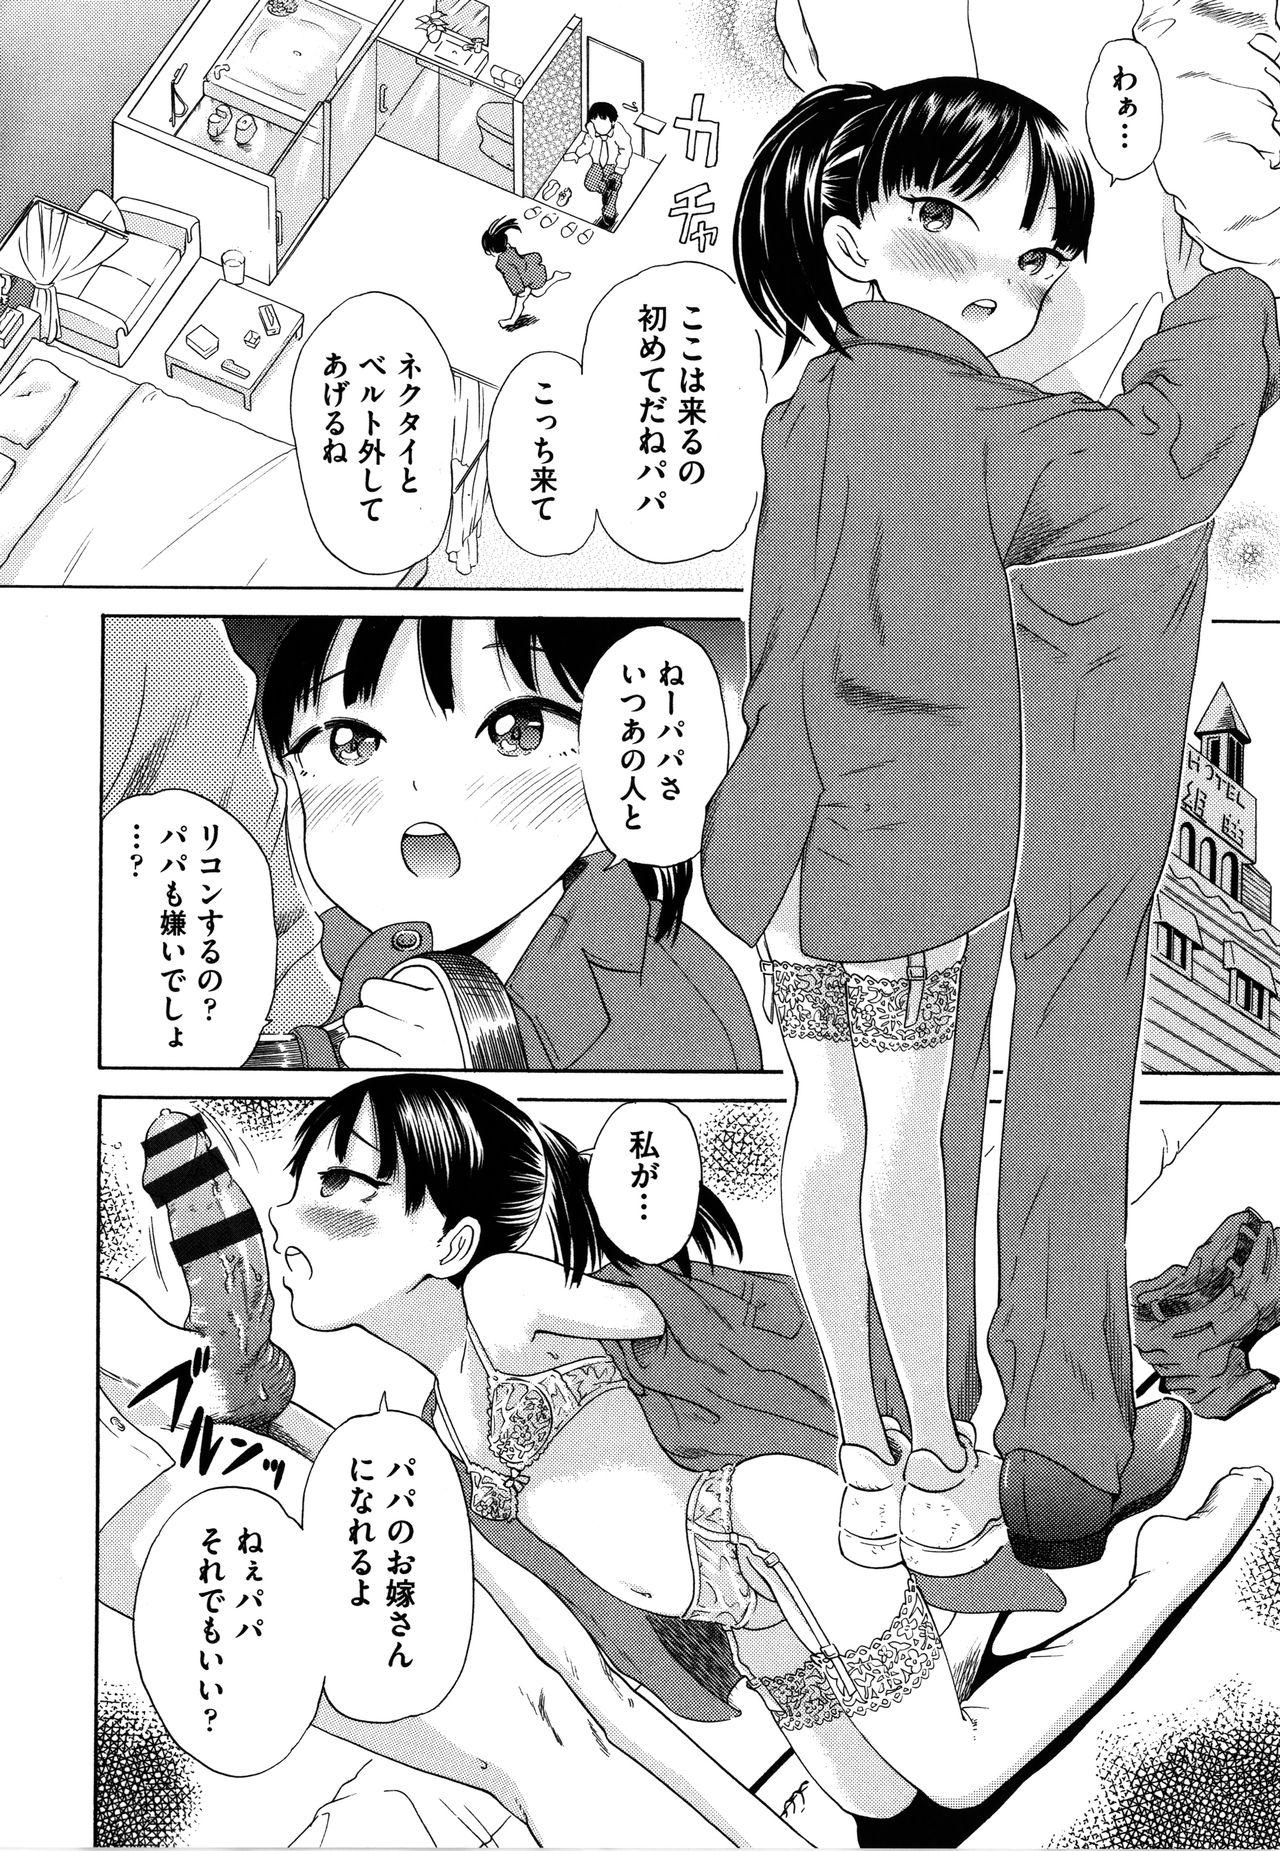 Slapping Shoujo Kumikyoku 18 Kink - Page 9